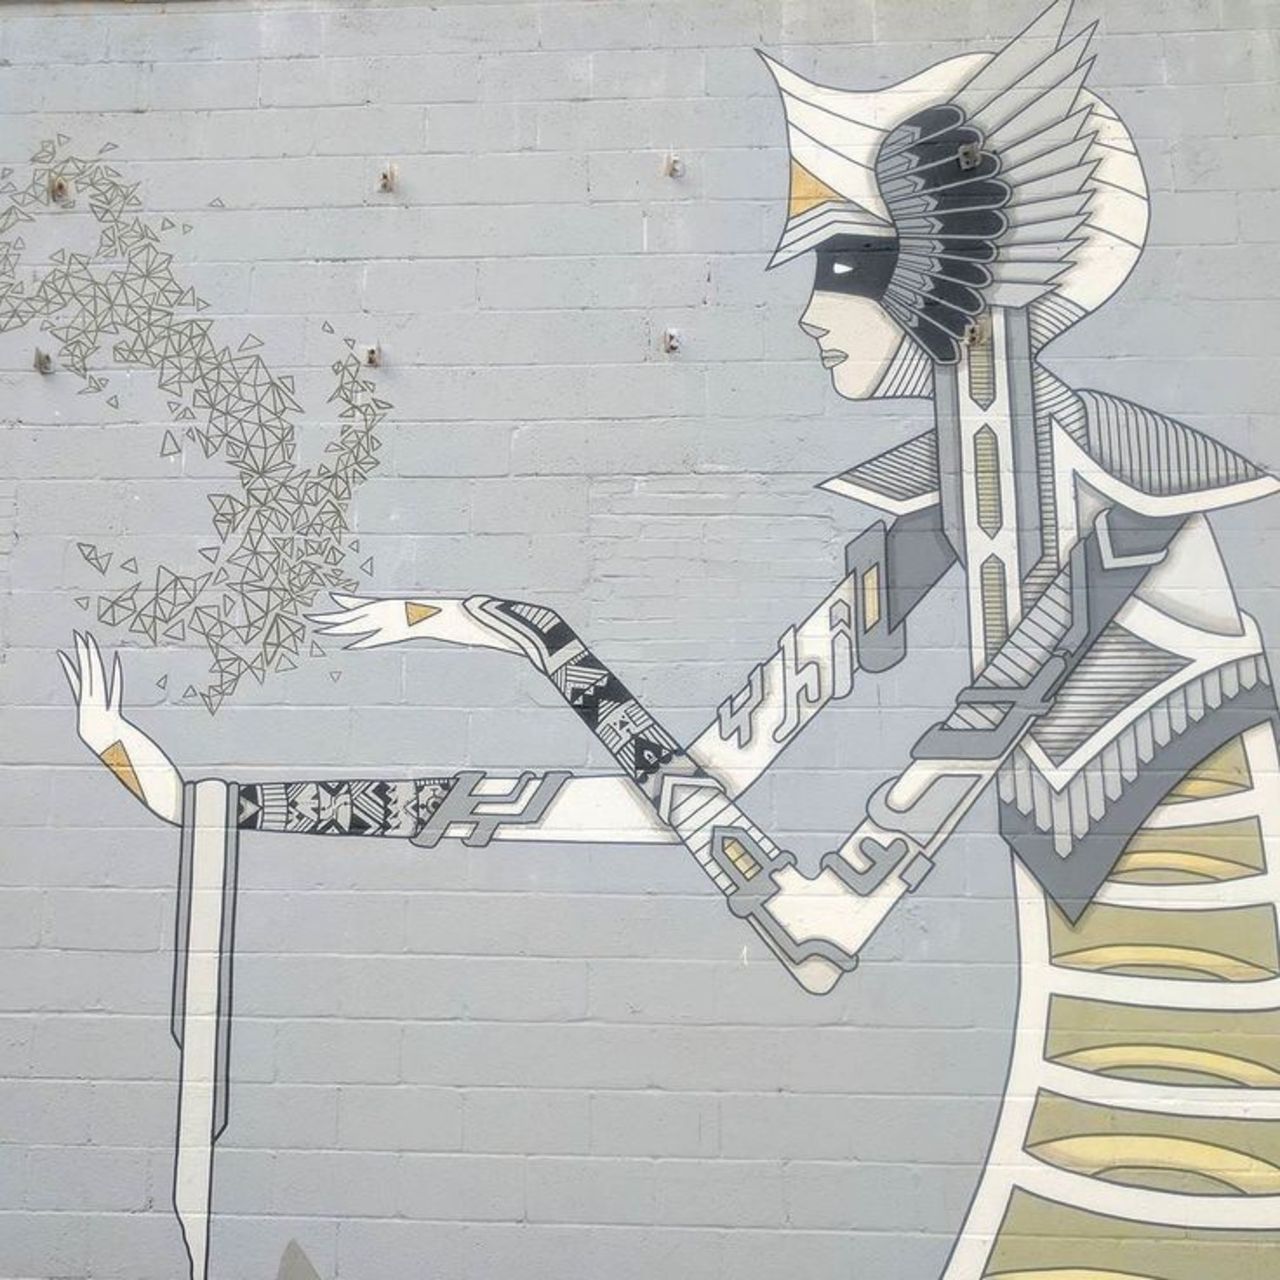 Mural - Nashville Walls Project https://buff.ly/2yf7Lsj  #streetart #mural #graffiti #art https://t.co/fdiPZRSMi5